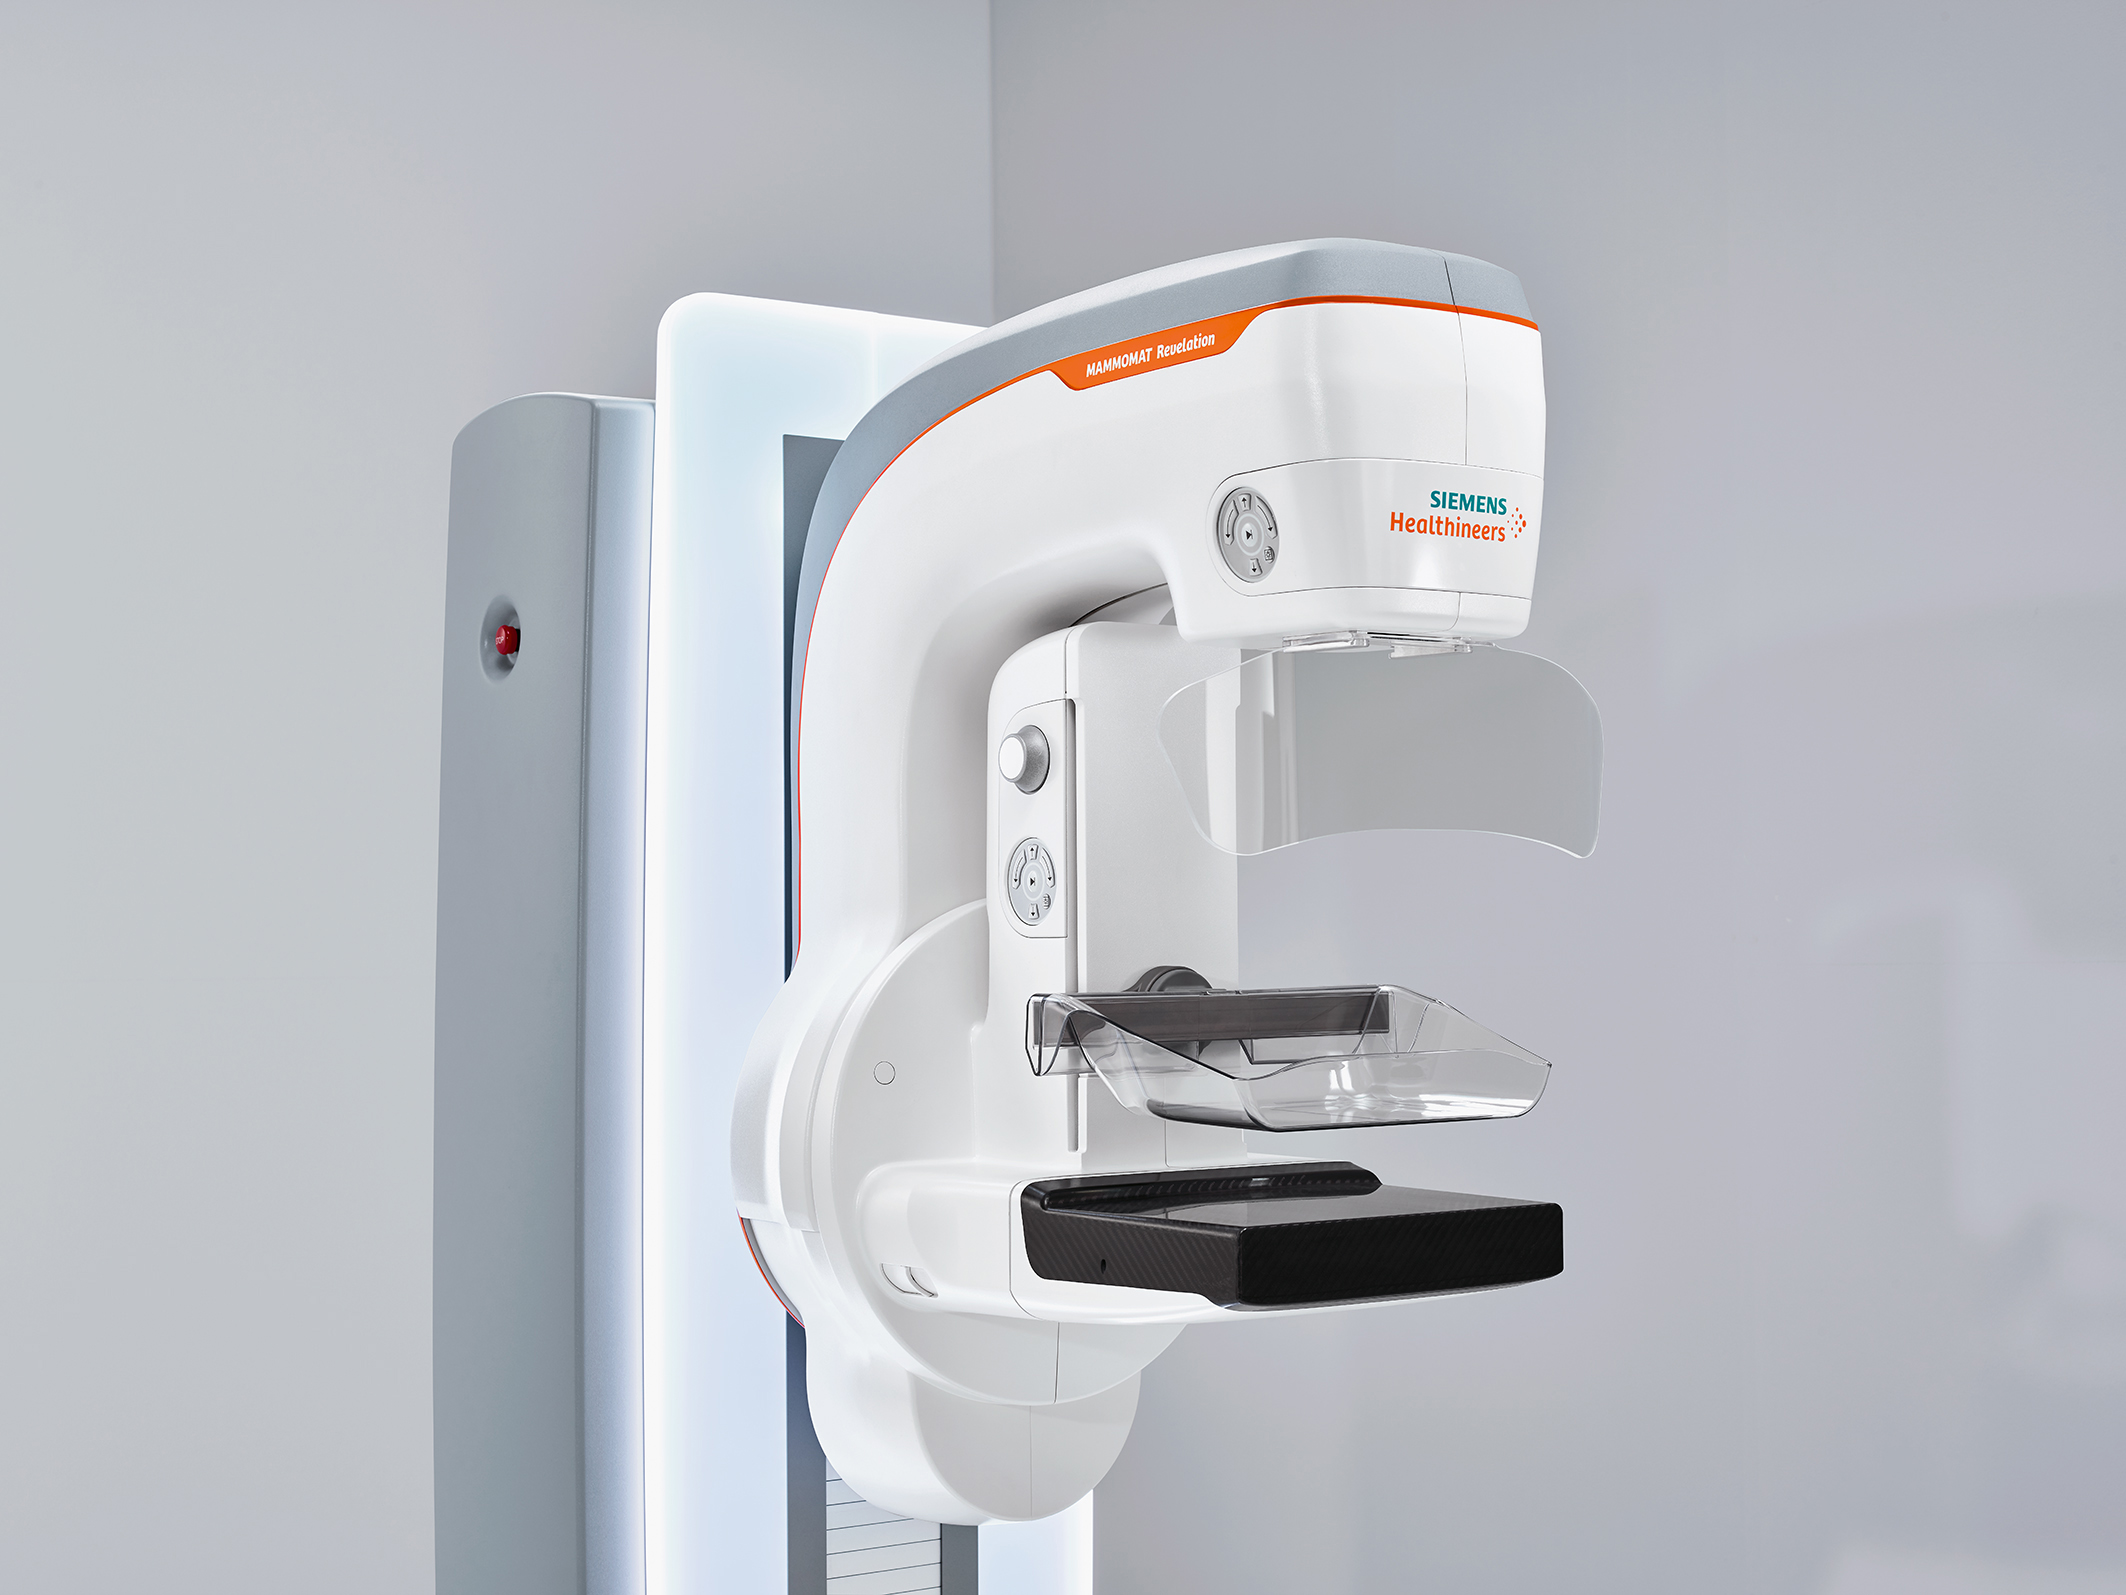 3D Mammography Machine